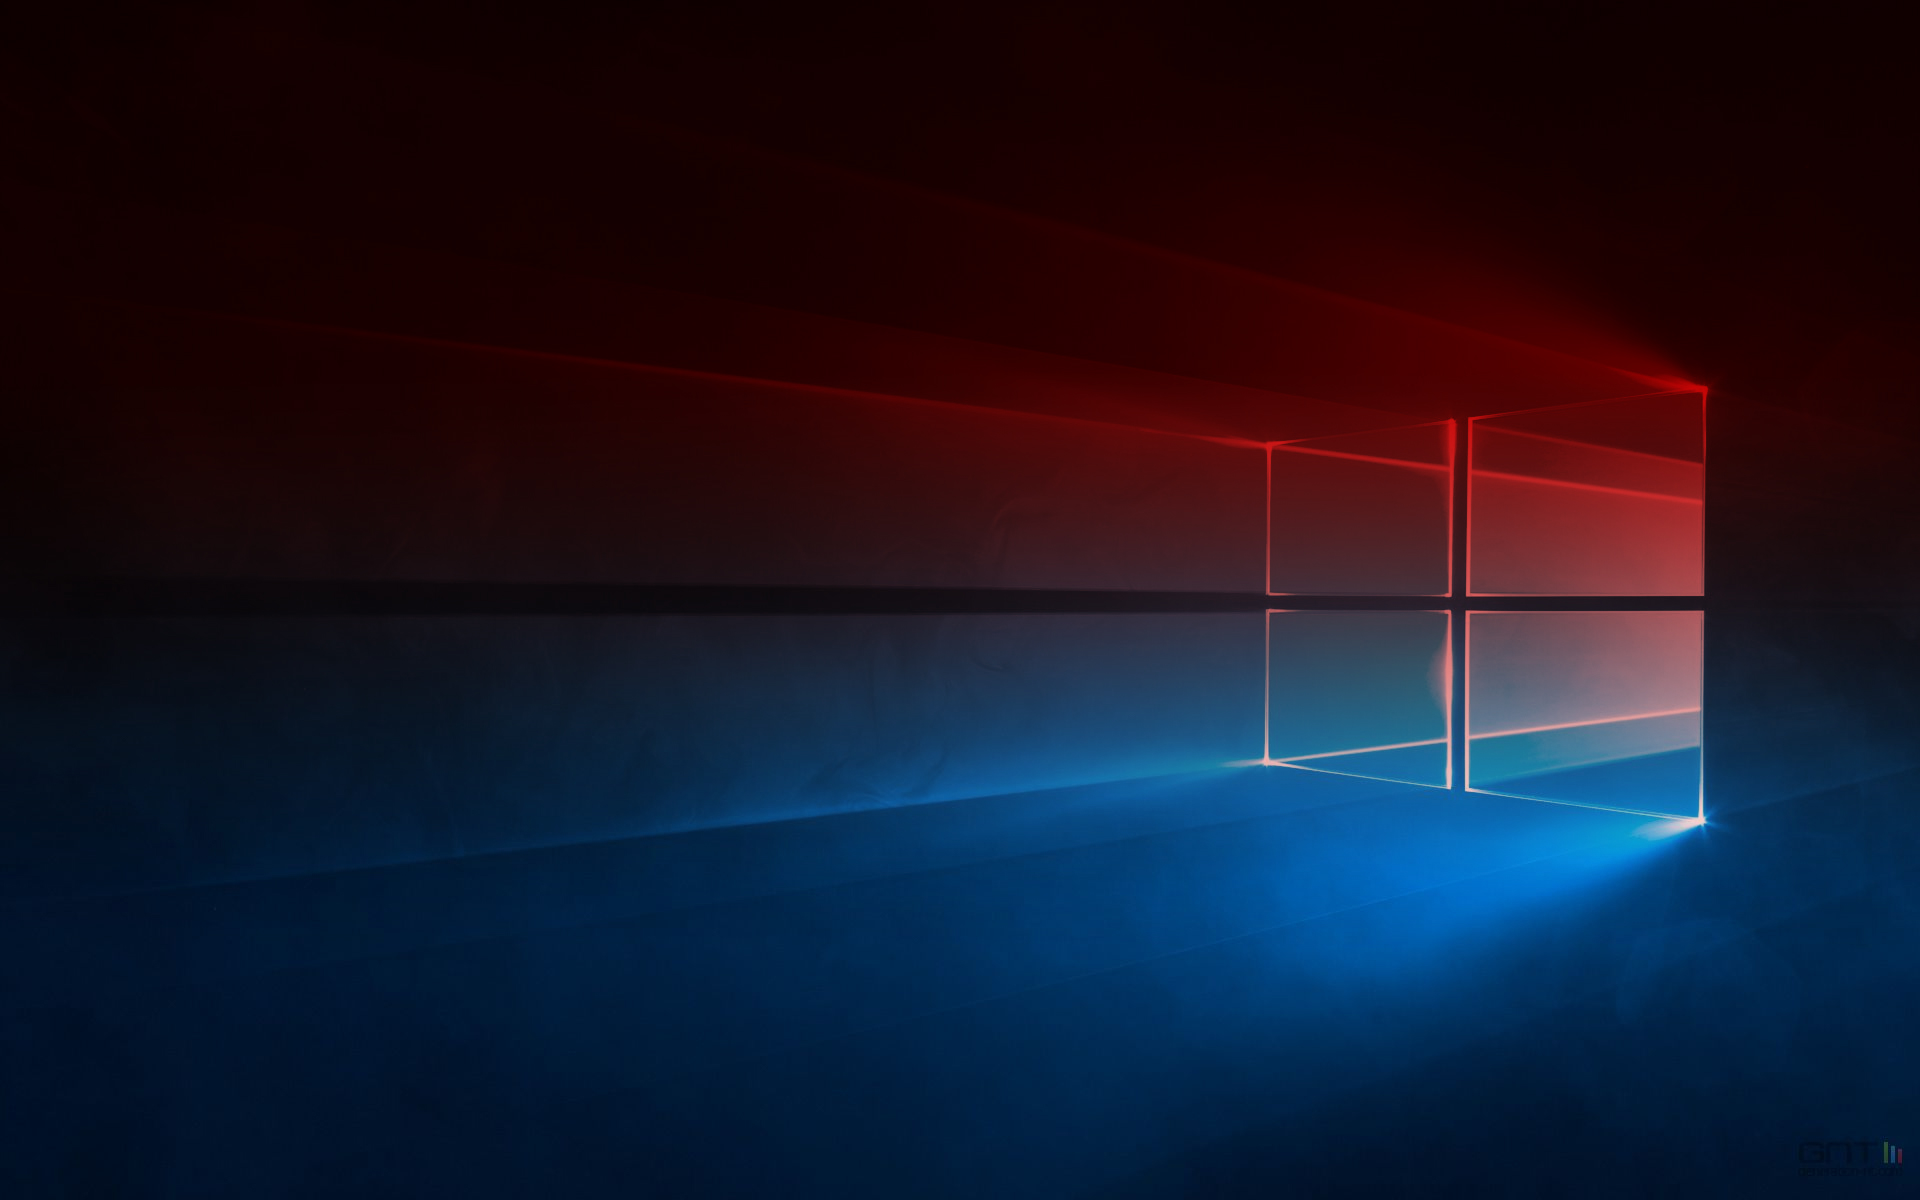 How to Check Cpu Temp Windows 10?